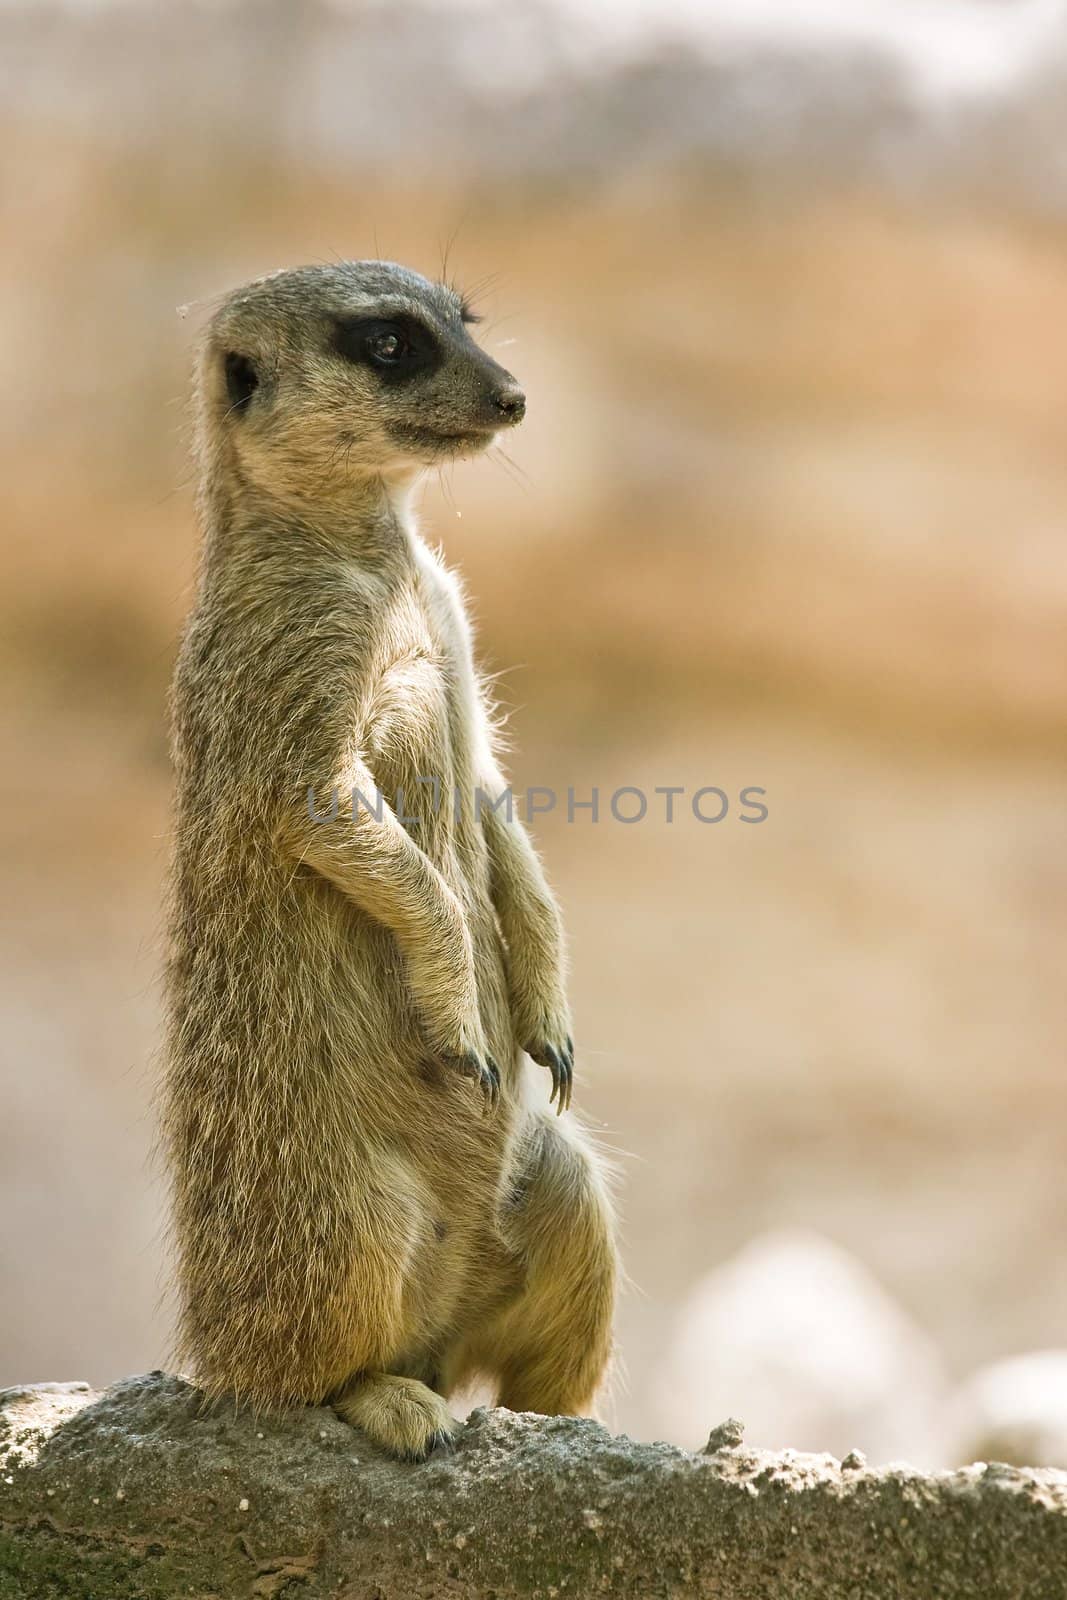 The Meerkat lives in all parts of the Kalahari Desert in Africa